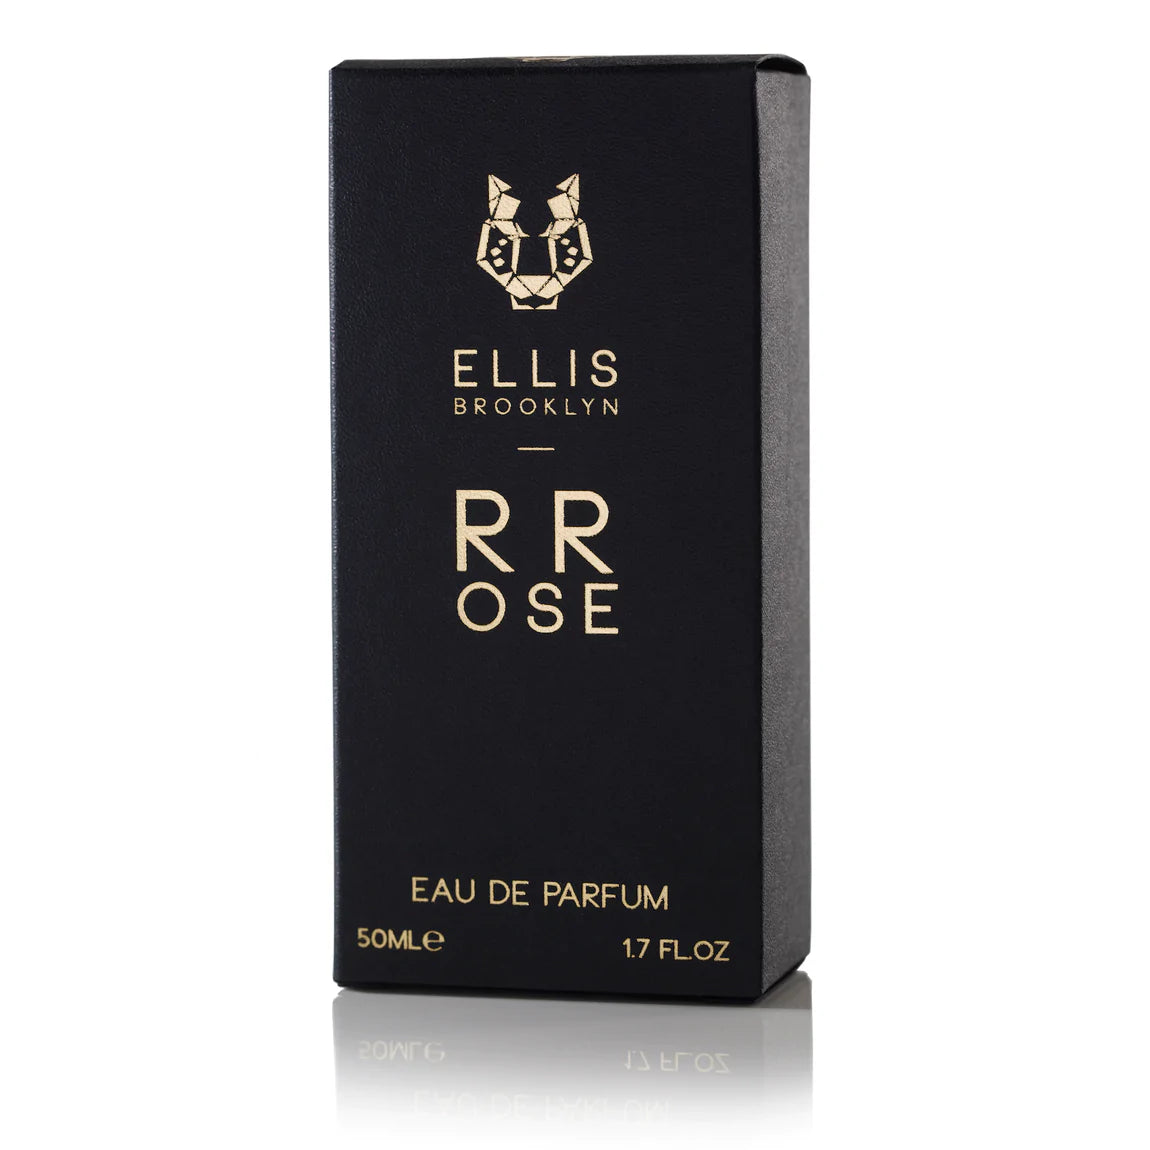 Ellis Brooklyn Rrose Eau de Parfum 1.7 oz